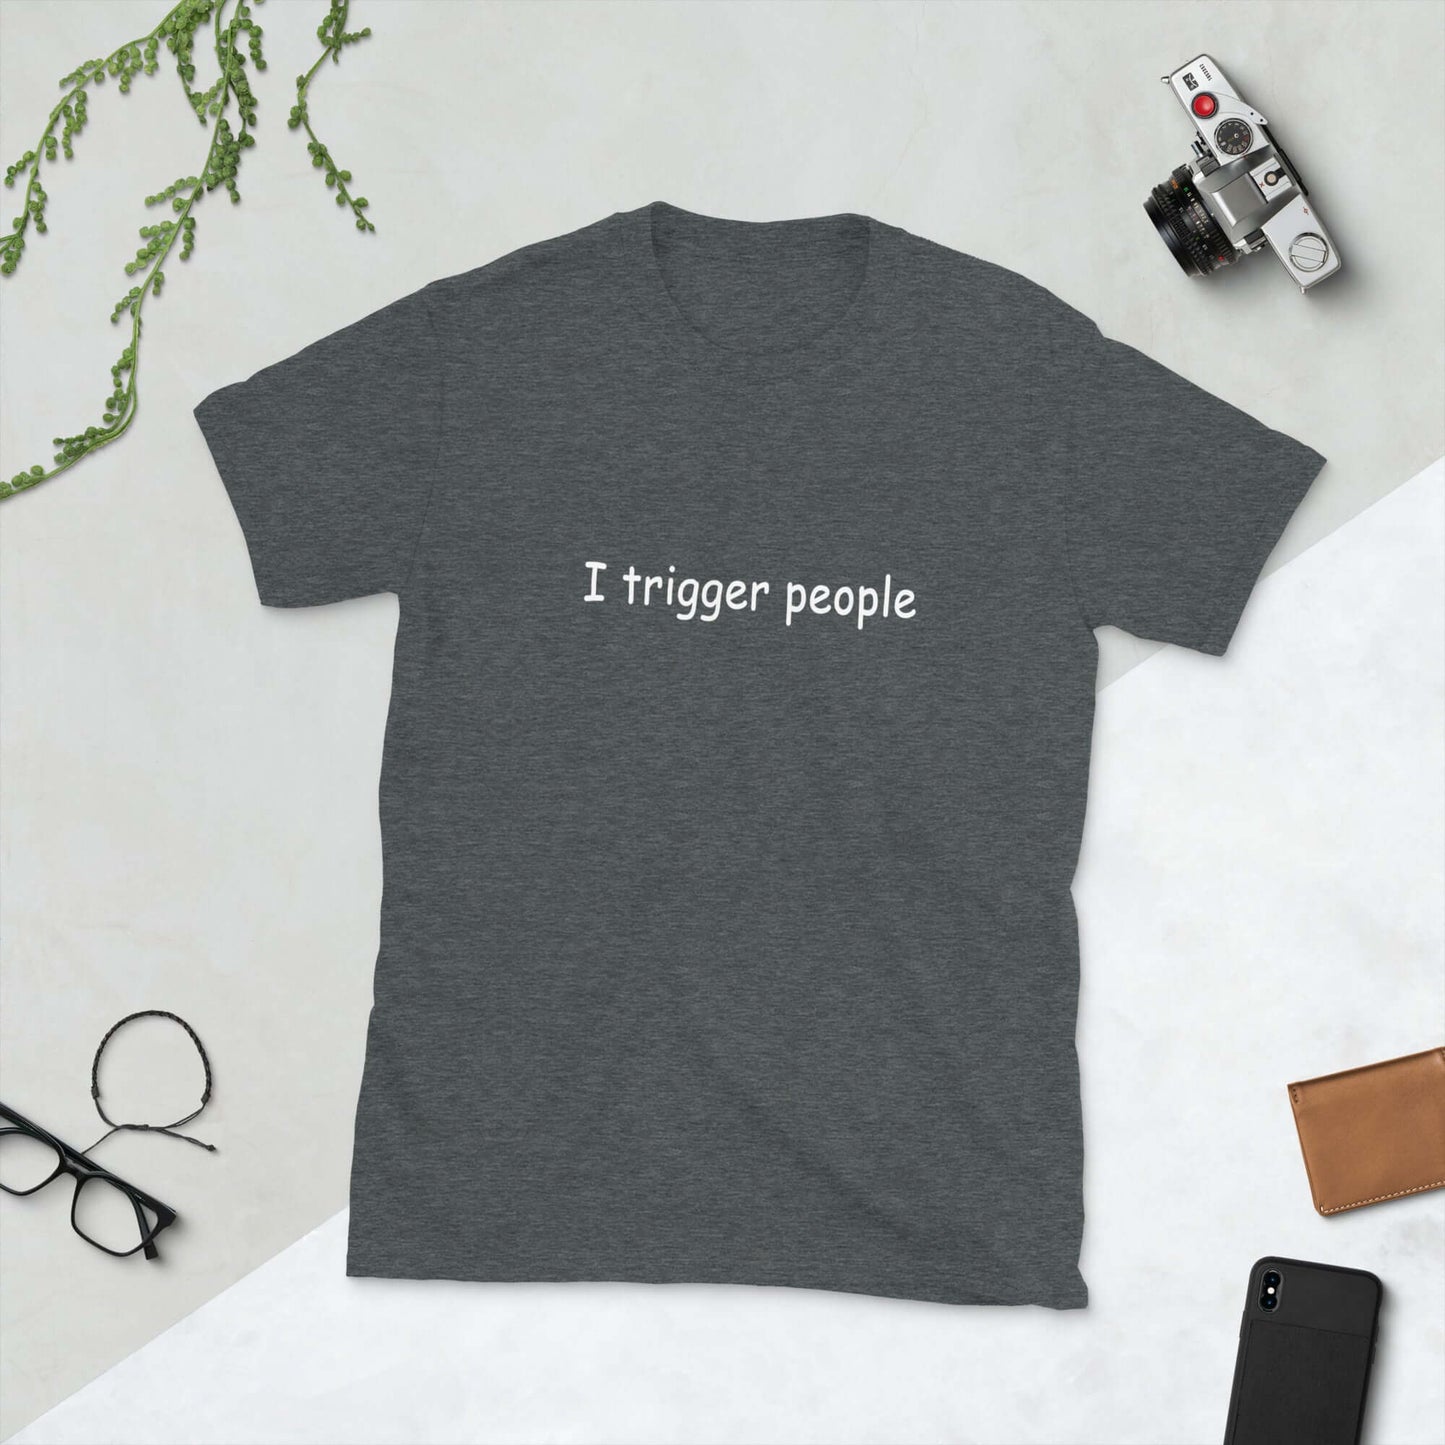 I trigger people t-shirt